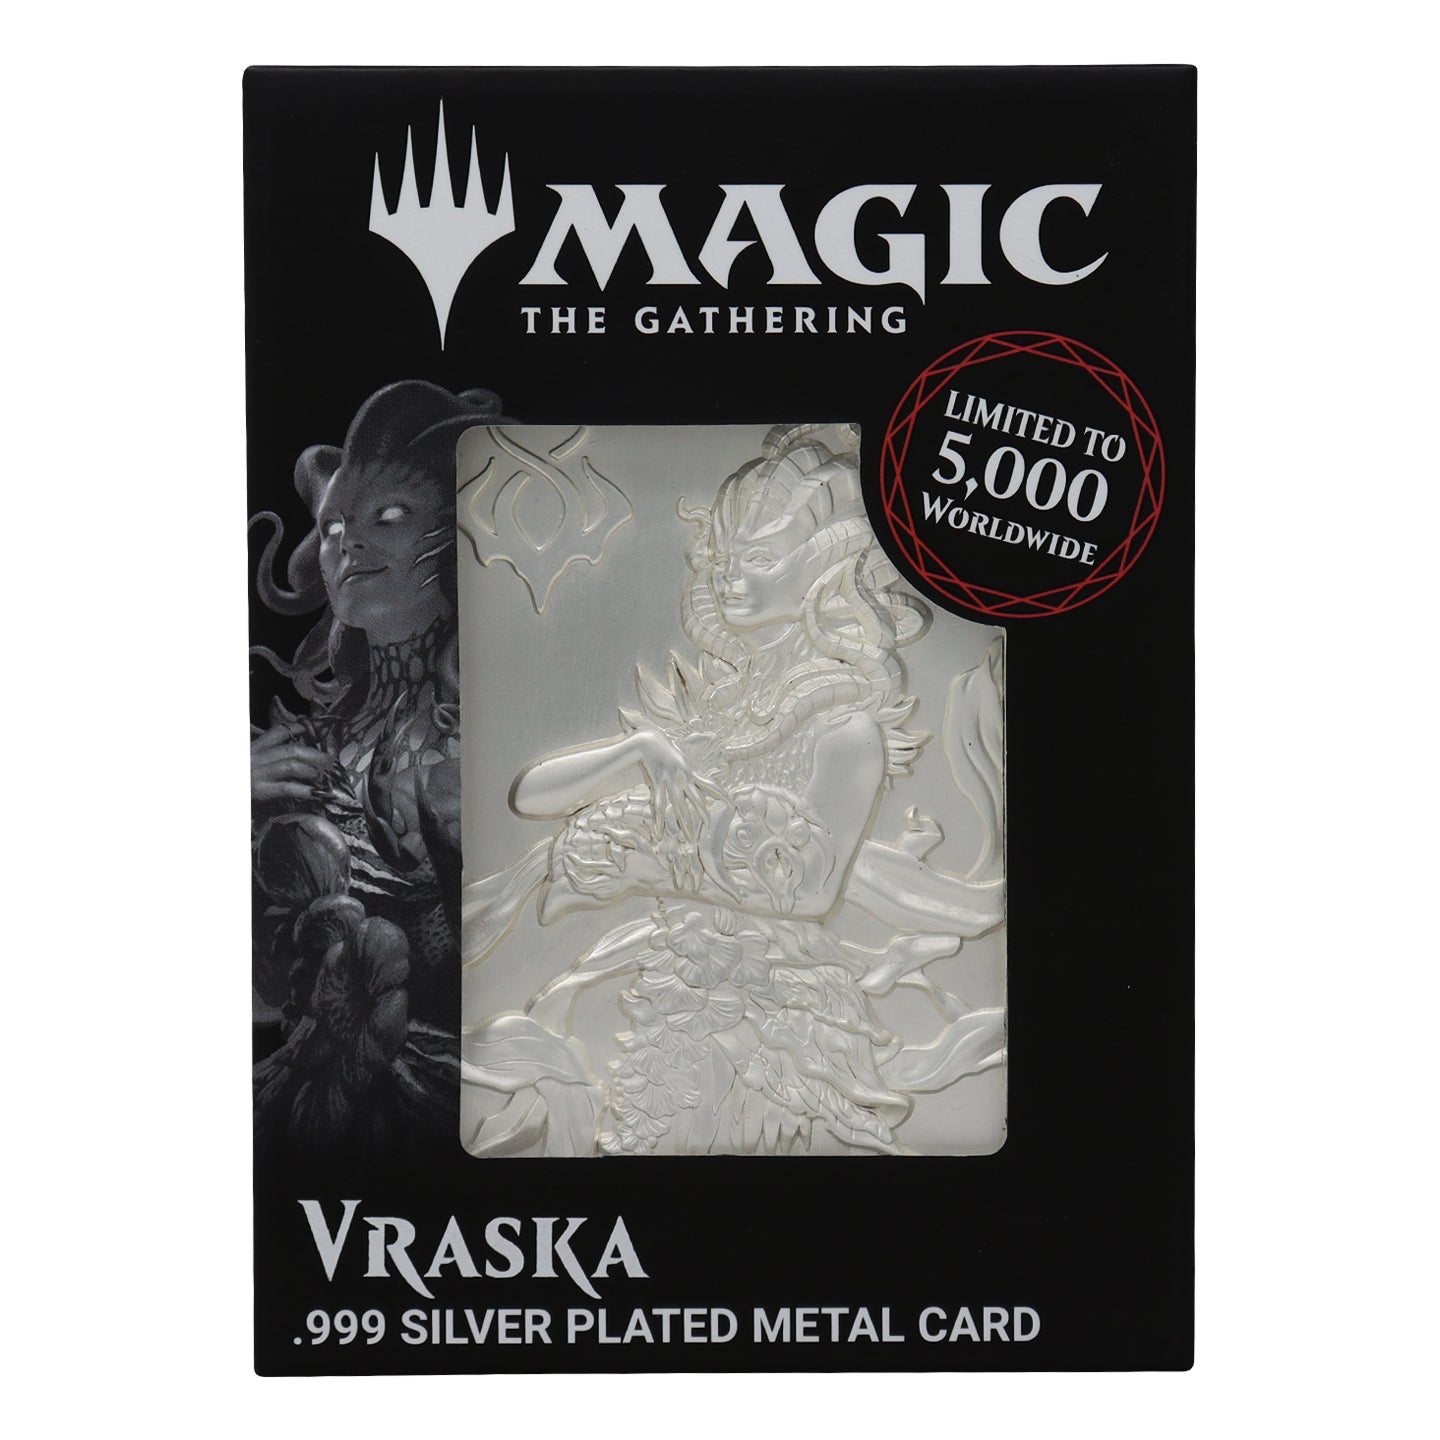 Magic the Gathering Limited Edition .999 Silver Plated Vraska Ingot